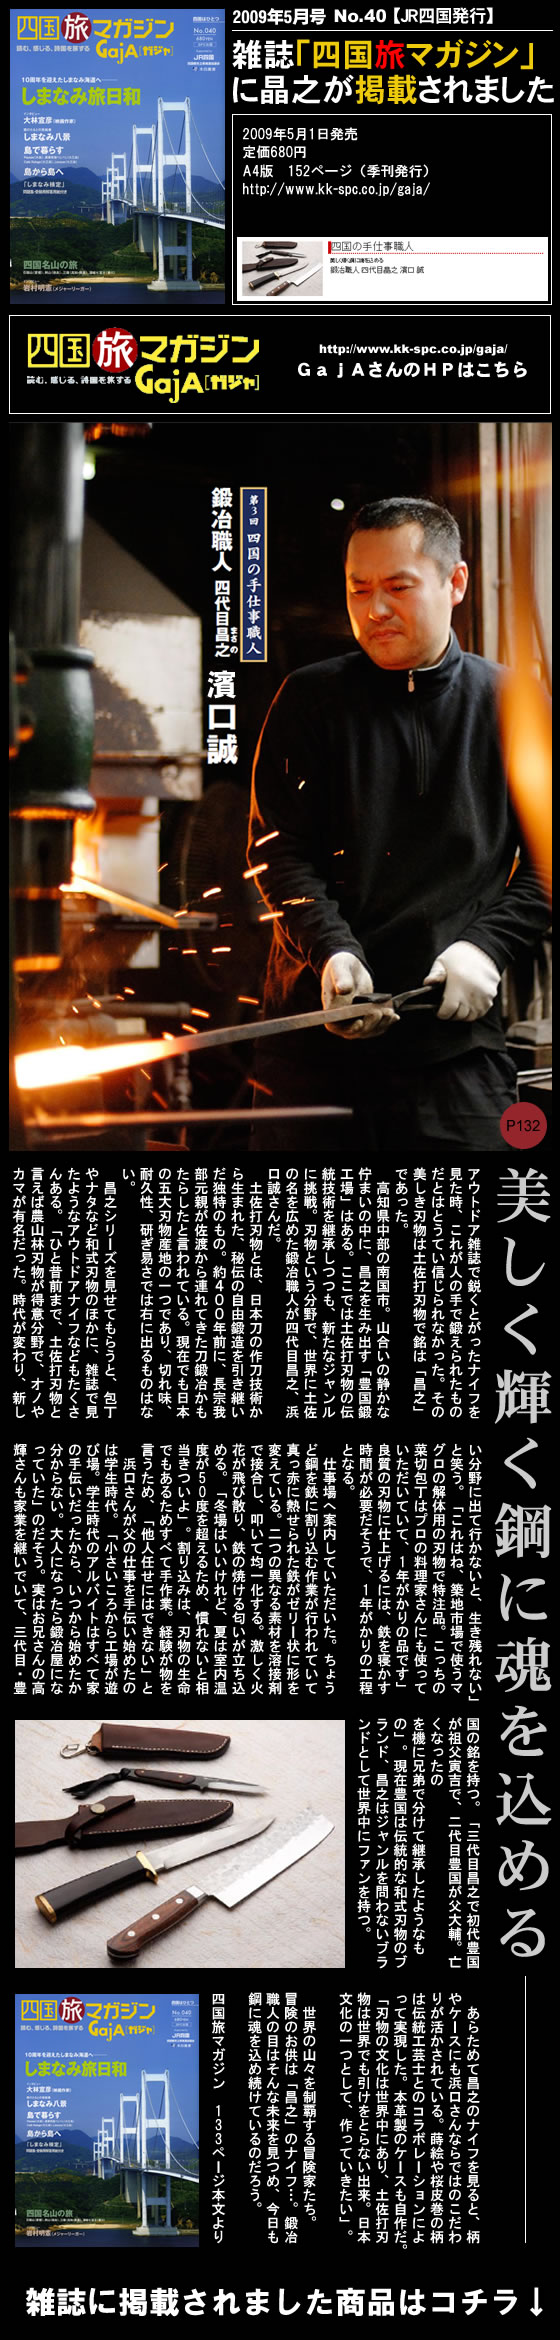 ＪＲ雑誌「四国旅マガジン2009年6月号」に掲載・紹介されました